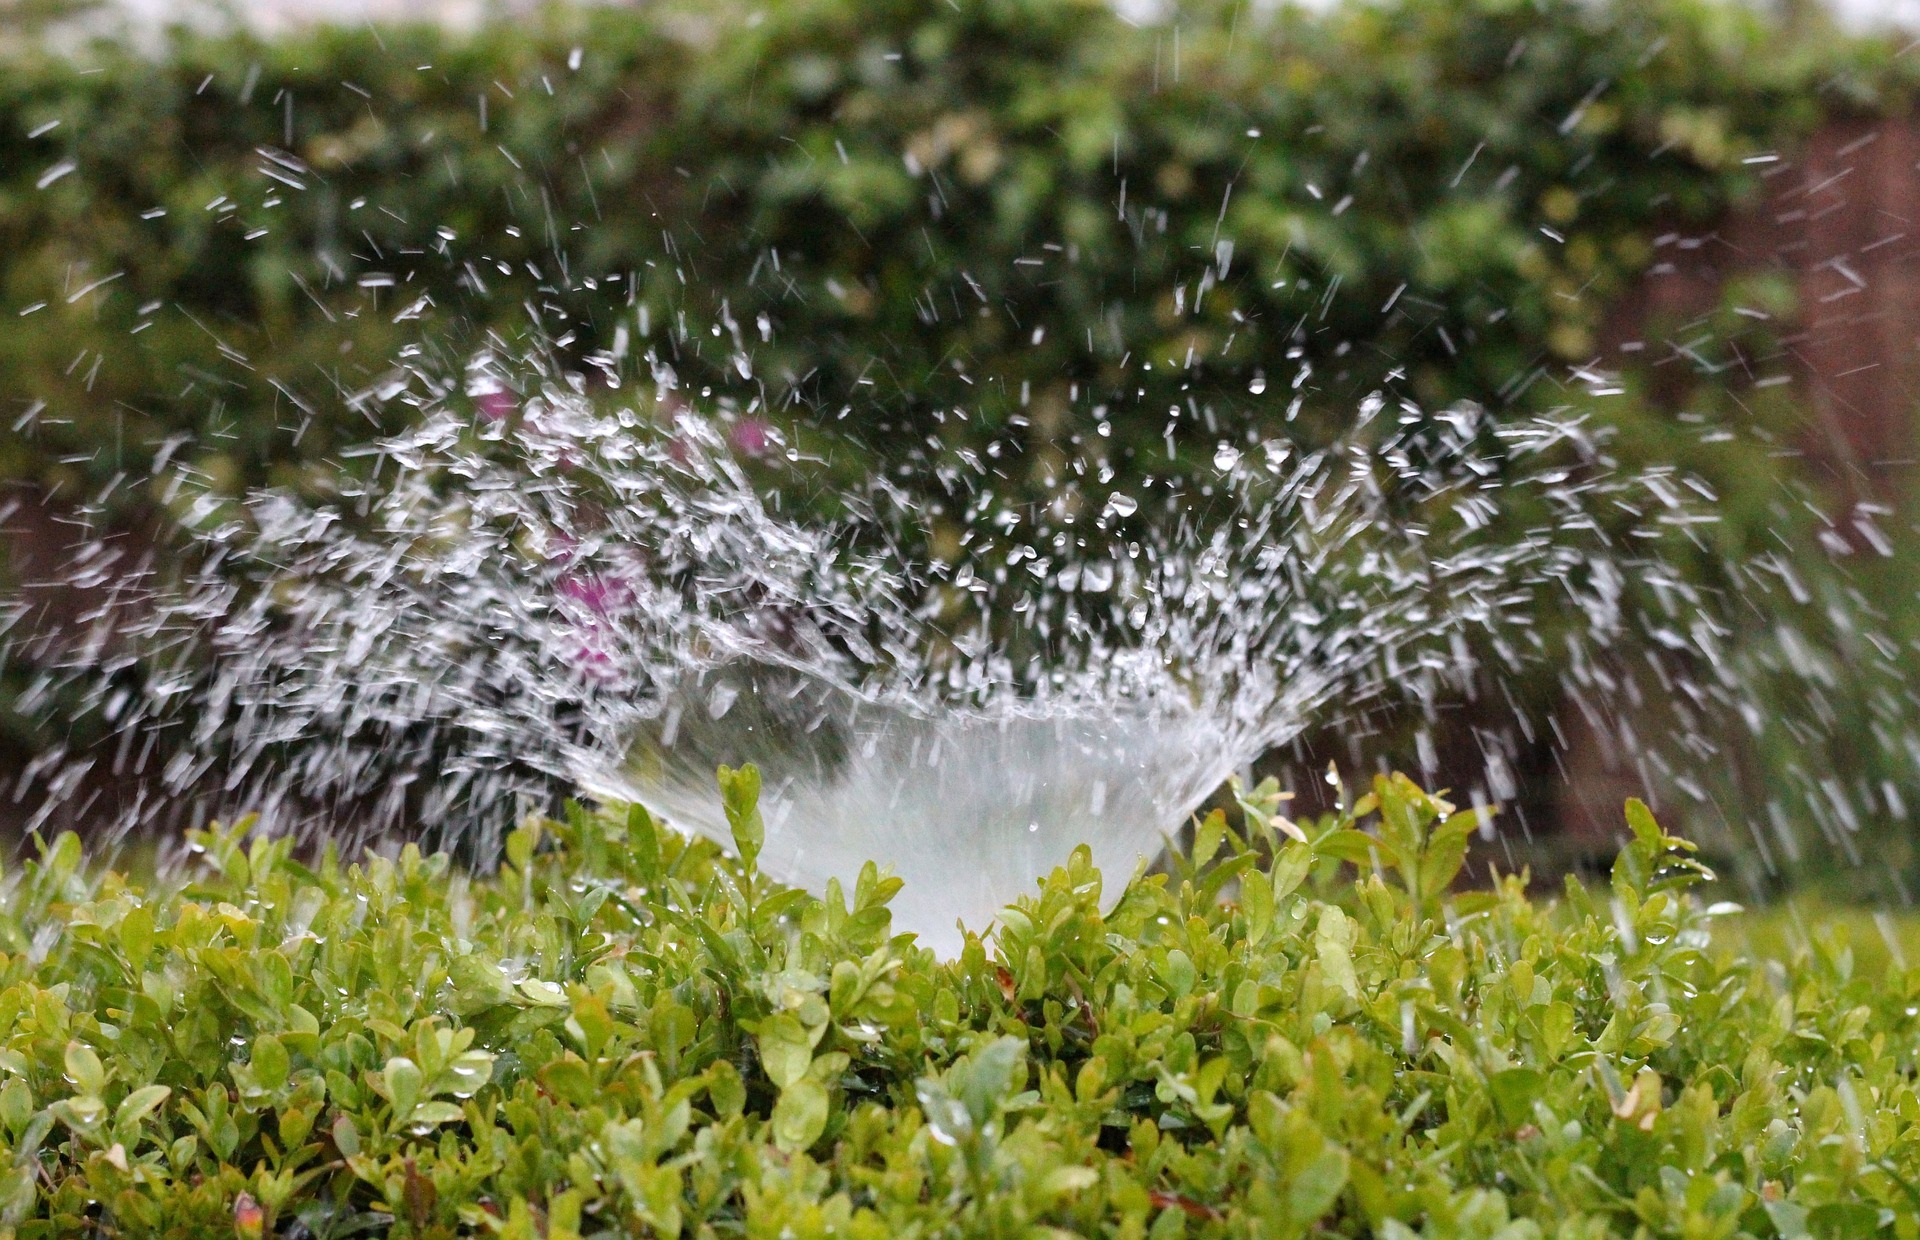 Watering restrictions begin June 15